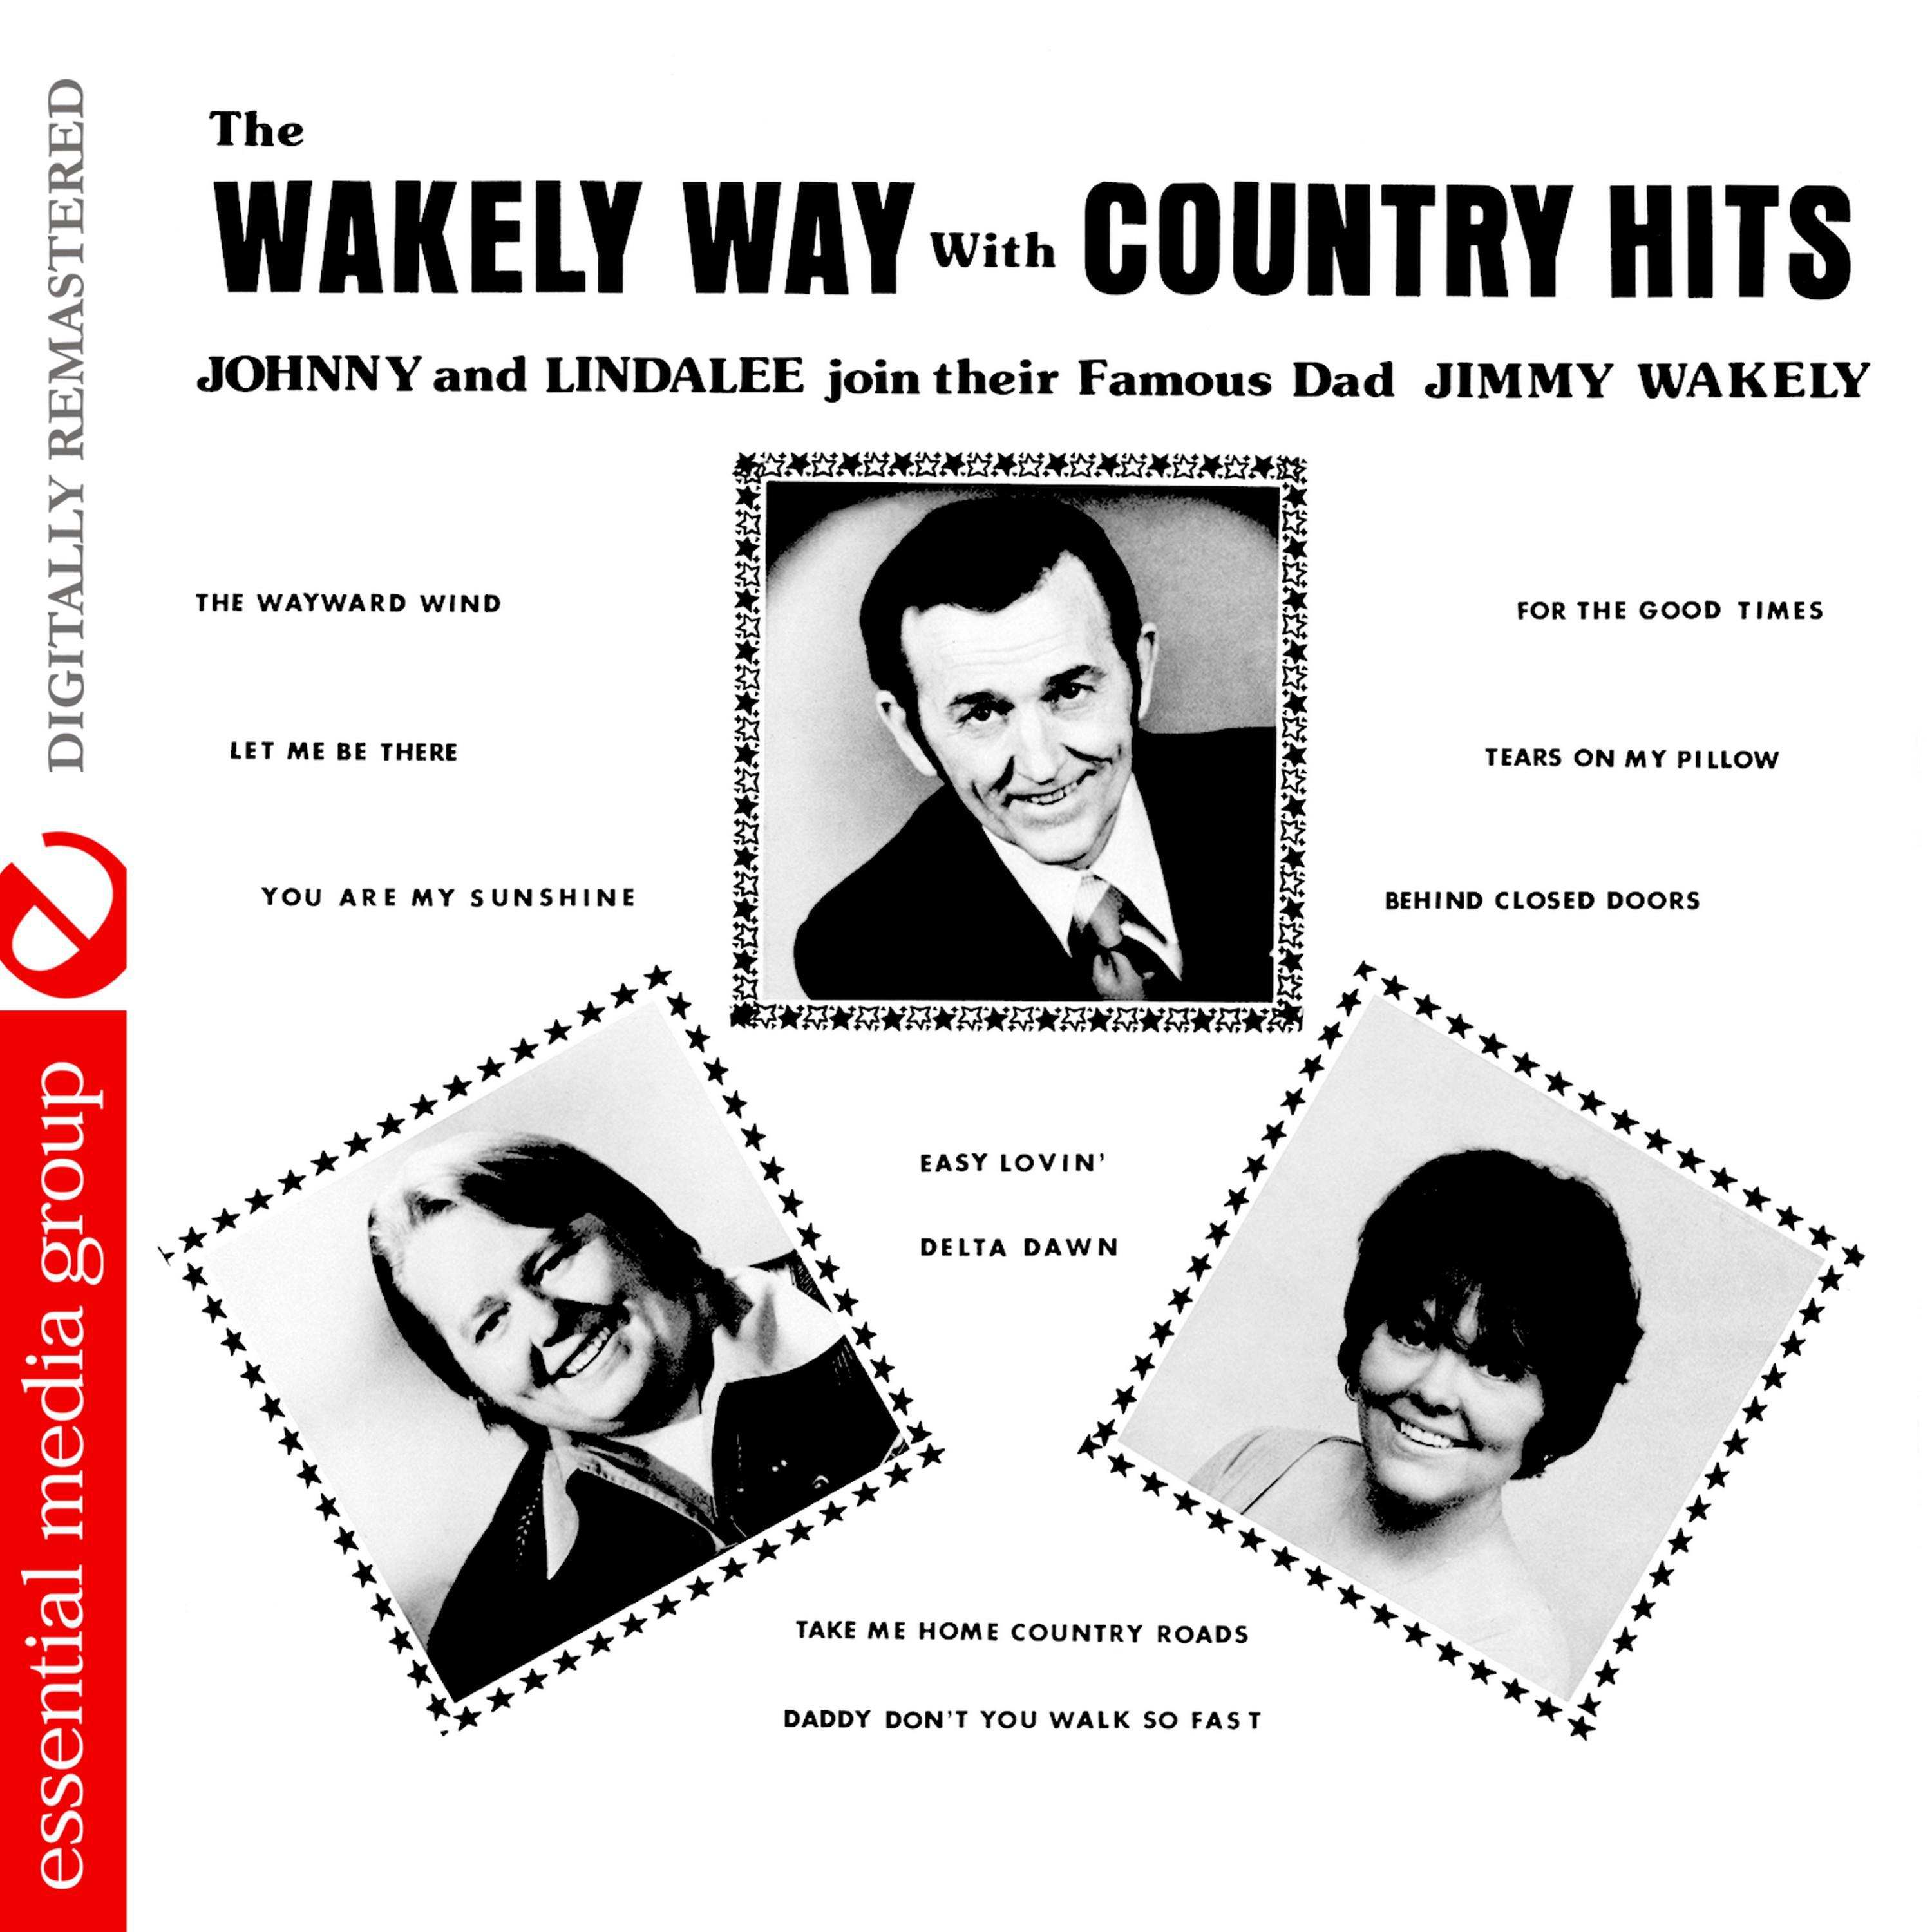 Jimmy Wakely - The Wayward Wind